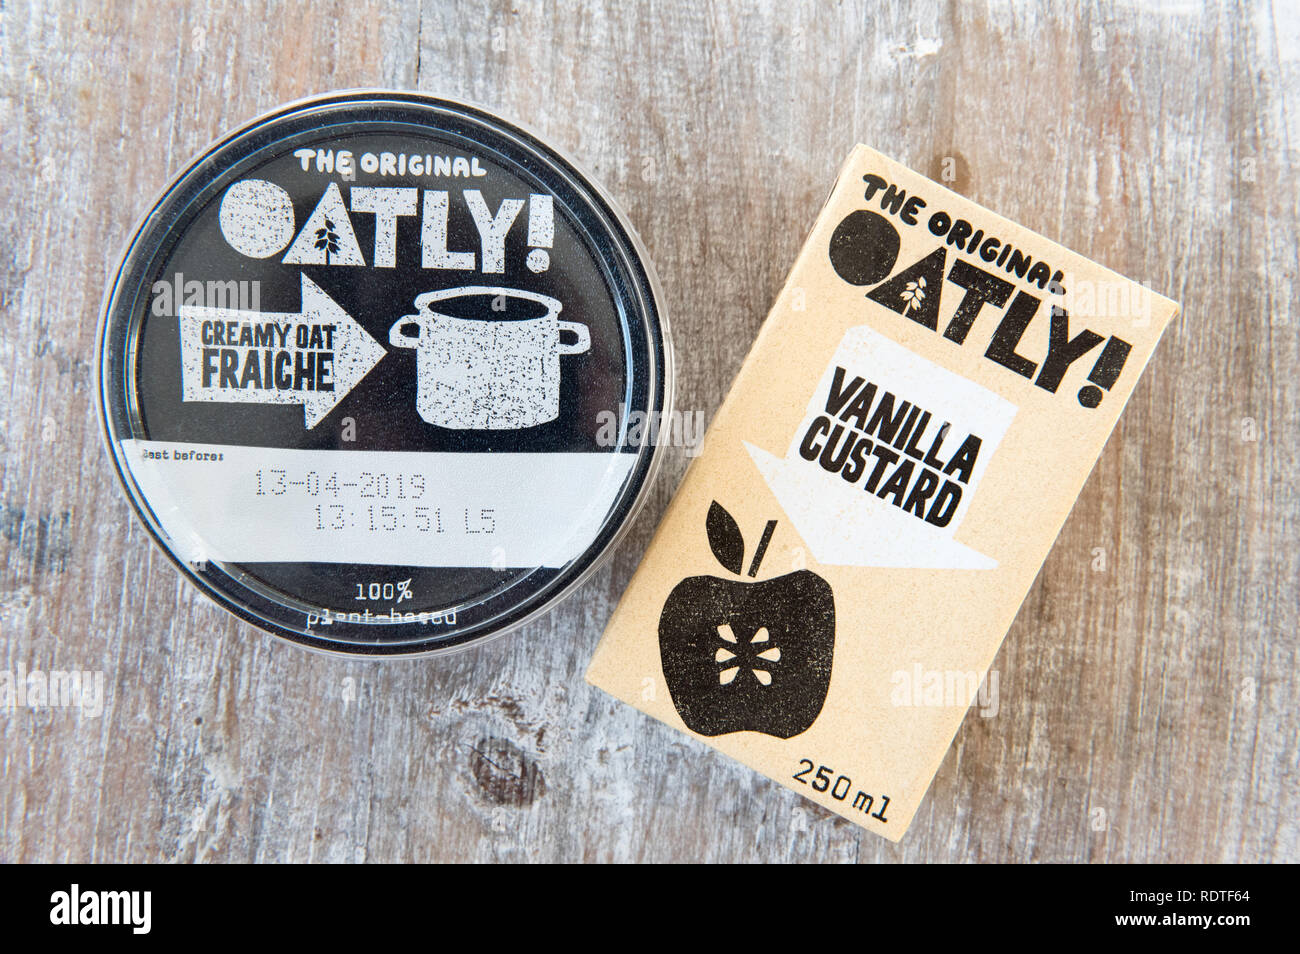 Oatly vegan Creamy Oat Fraiche and Vanilla Custard, cartons on wooden tray  Stock Photo - Alamy